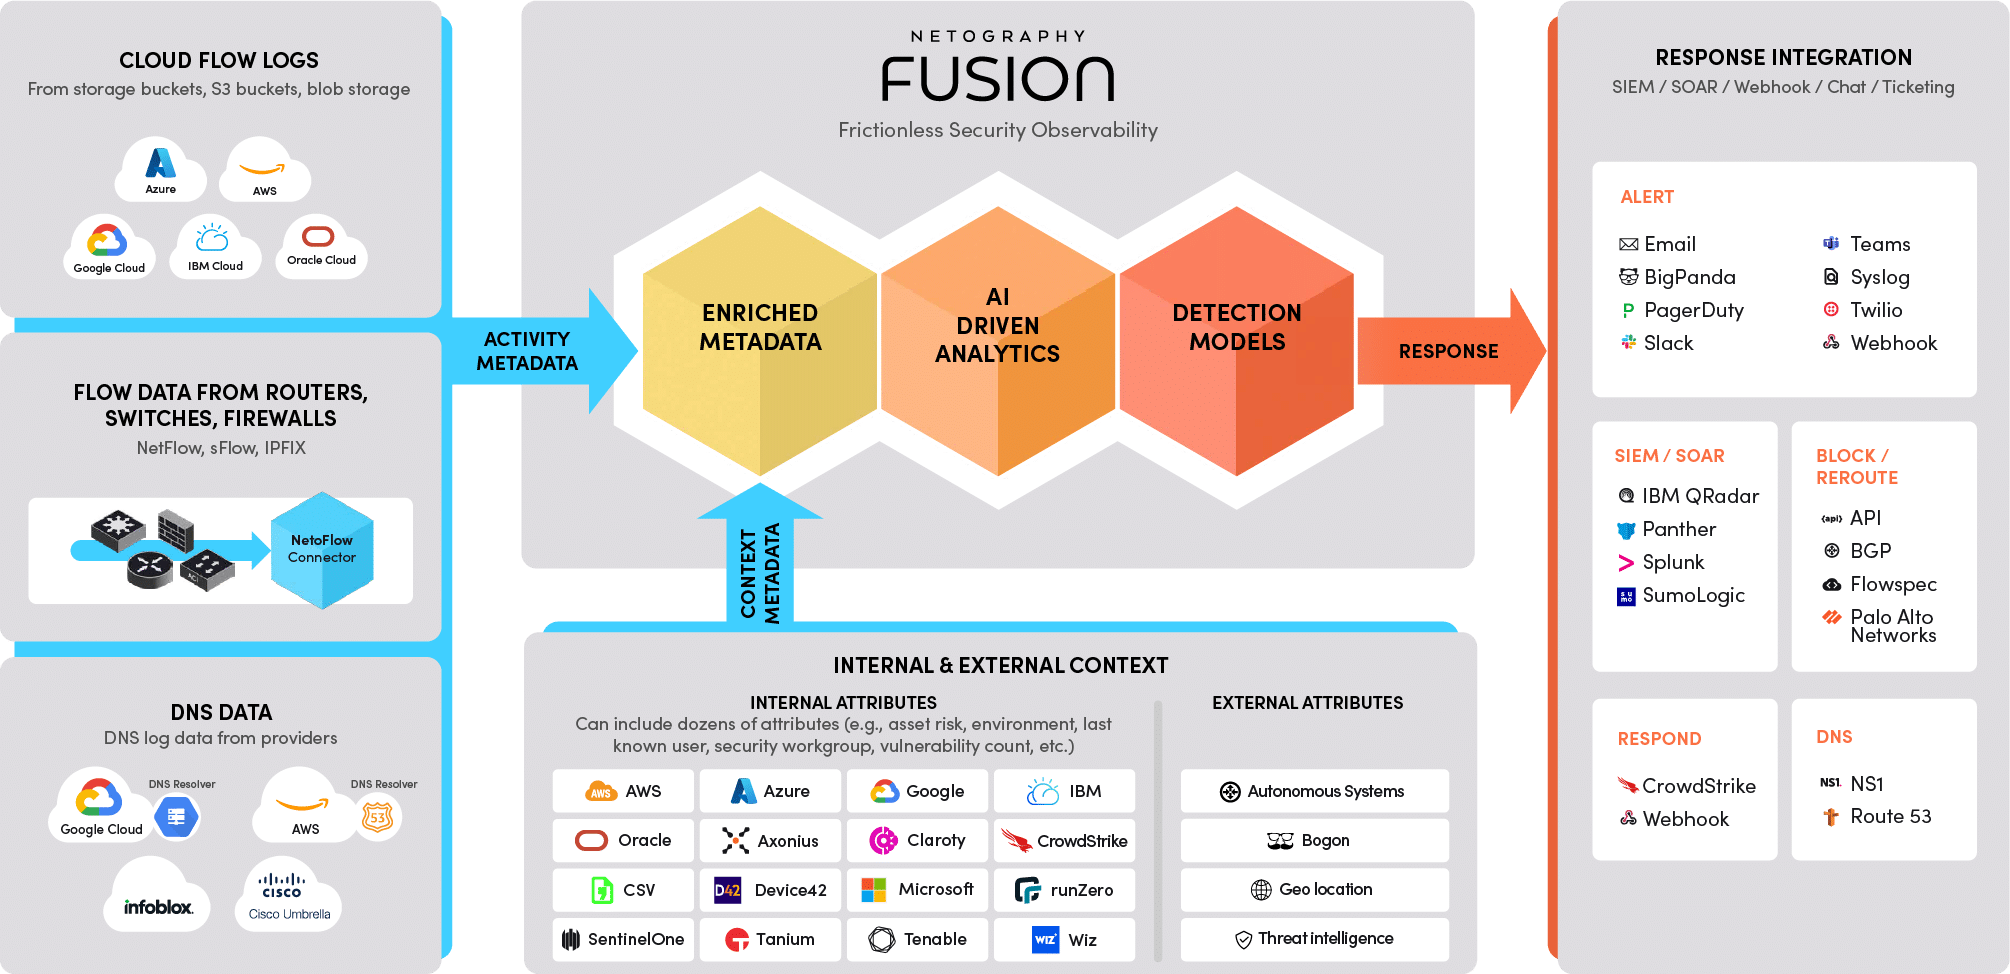 Netography Fusion Architecture Diagram